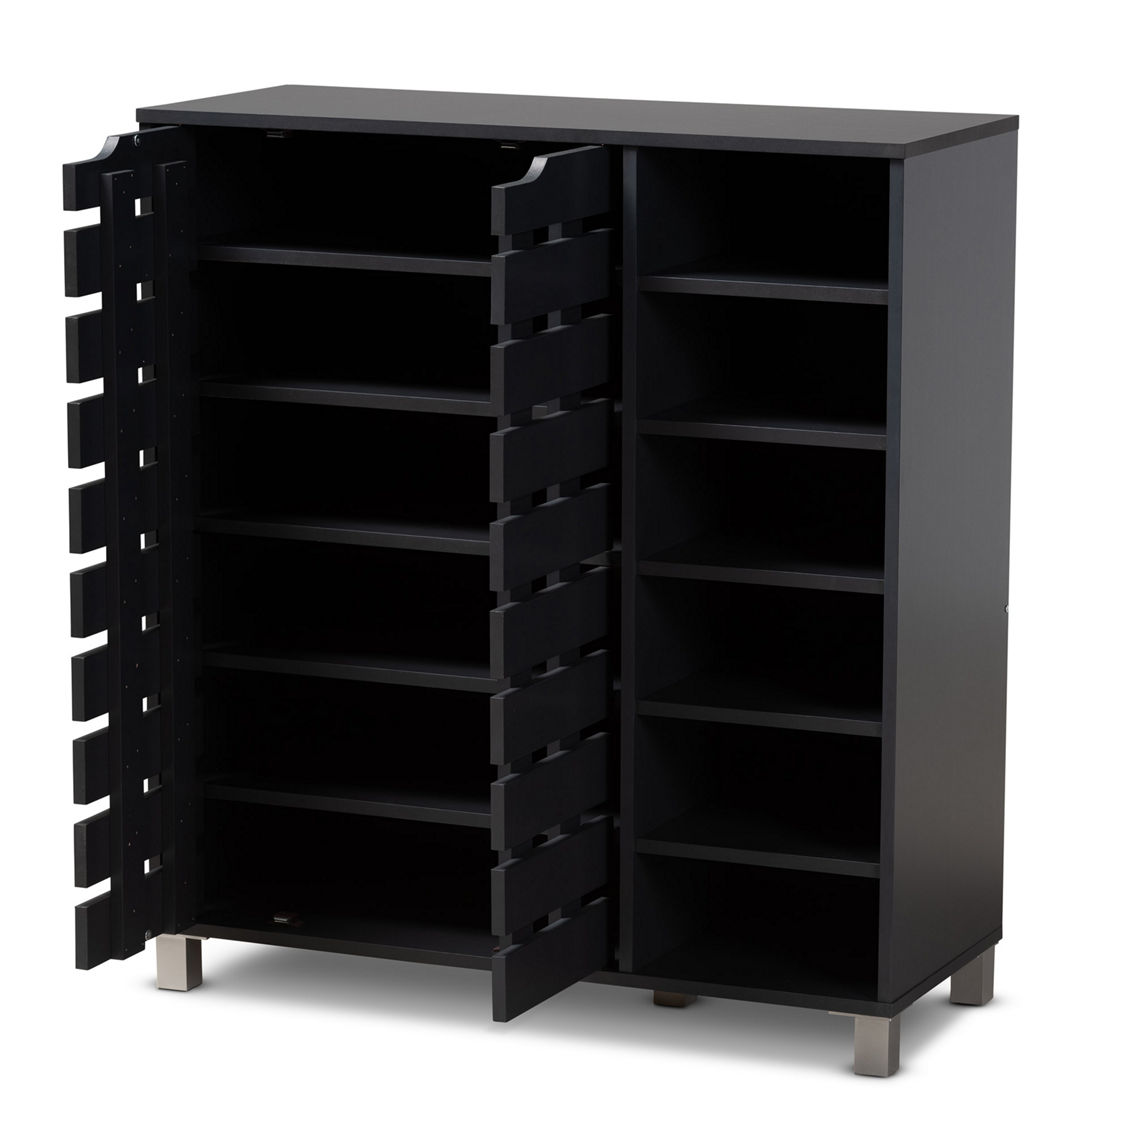 Baxton Studio Shirley Dark Grey Finished 2-Door Shoe Storage Cabinet with Shelves - Image 2 of 5